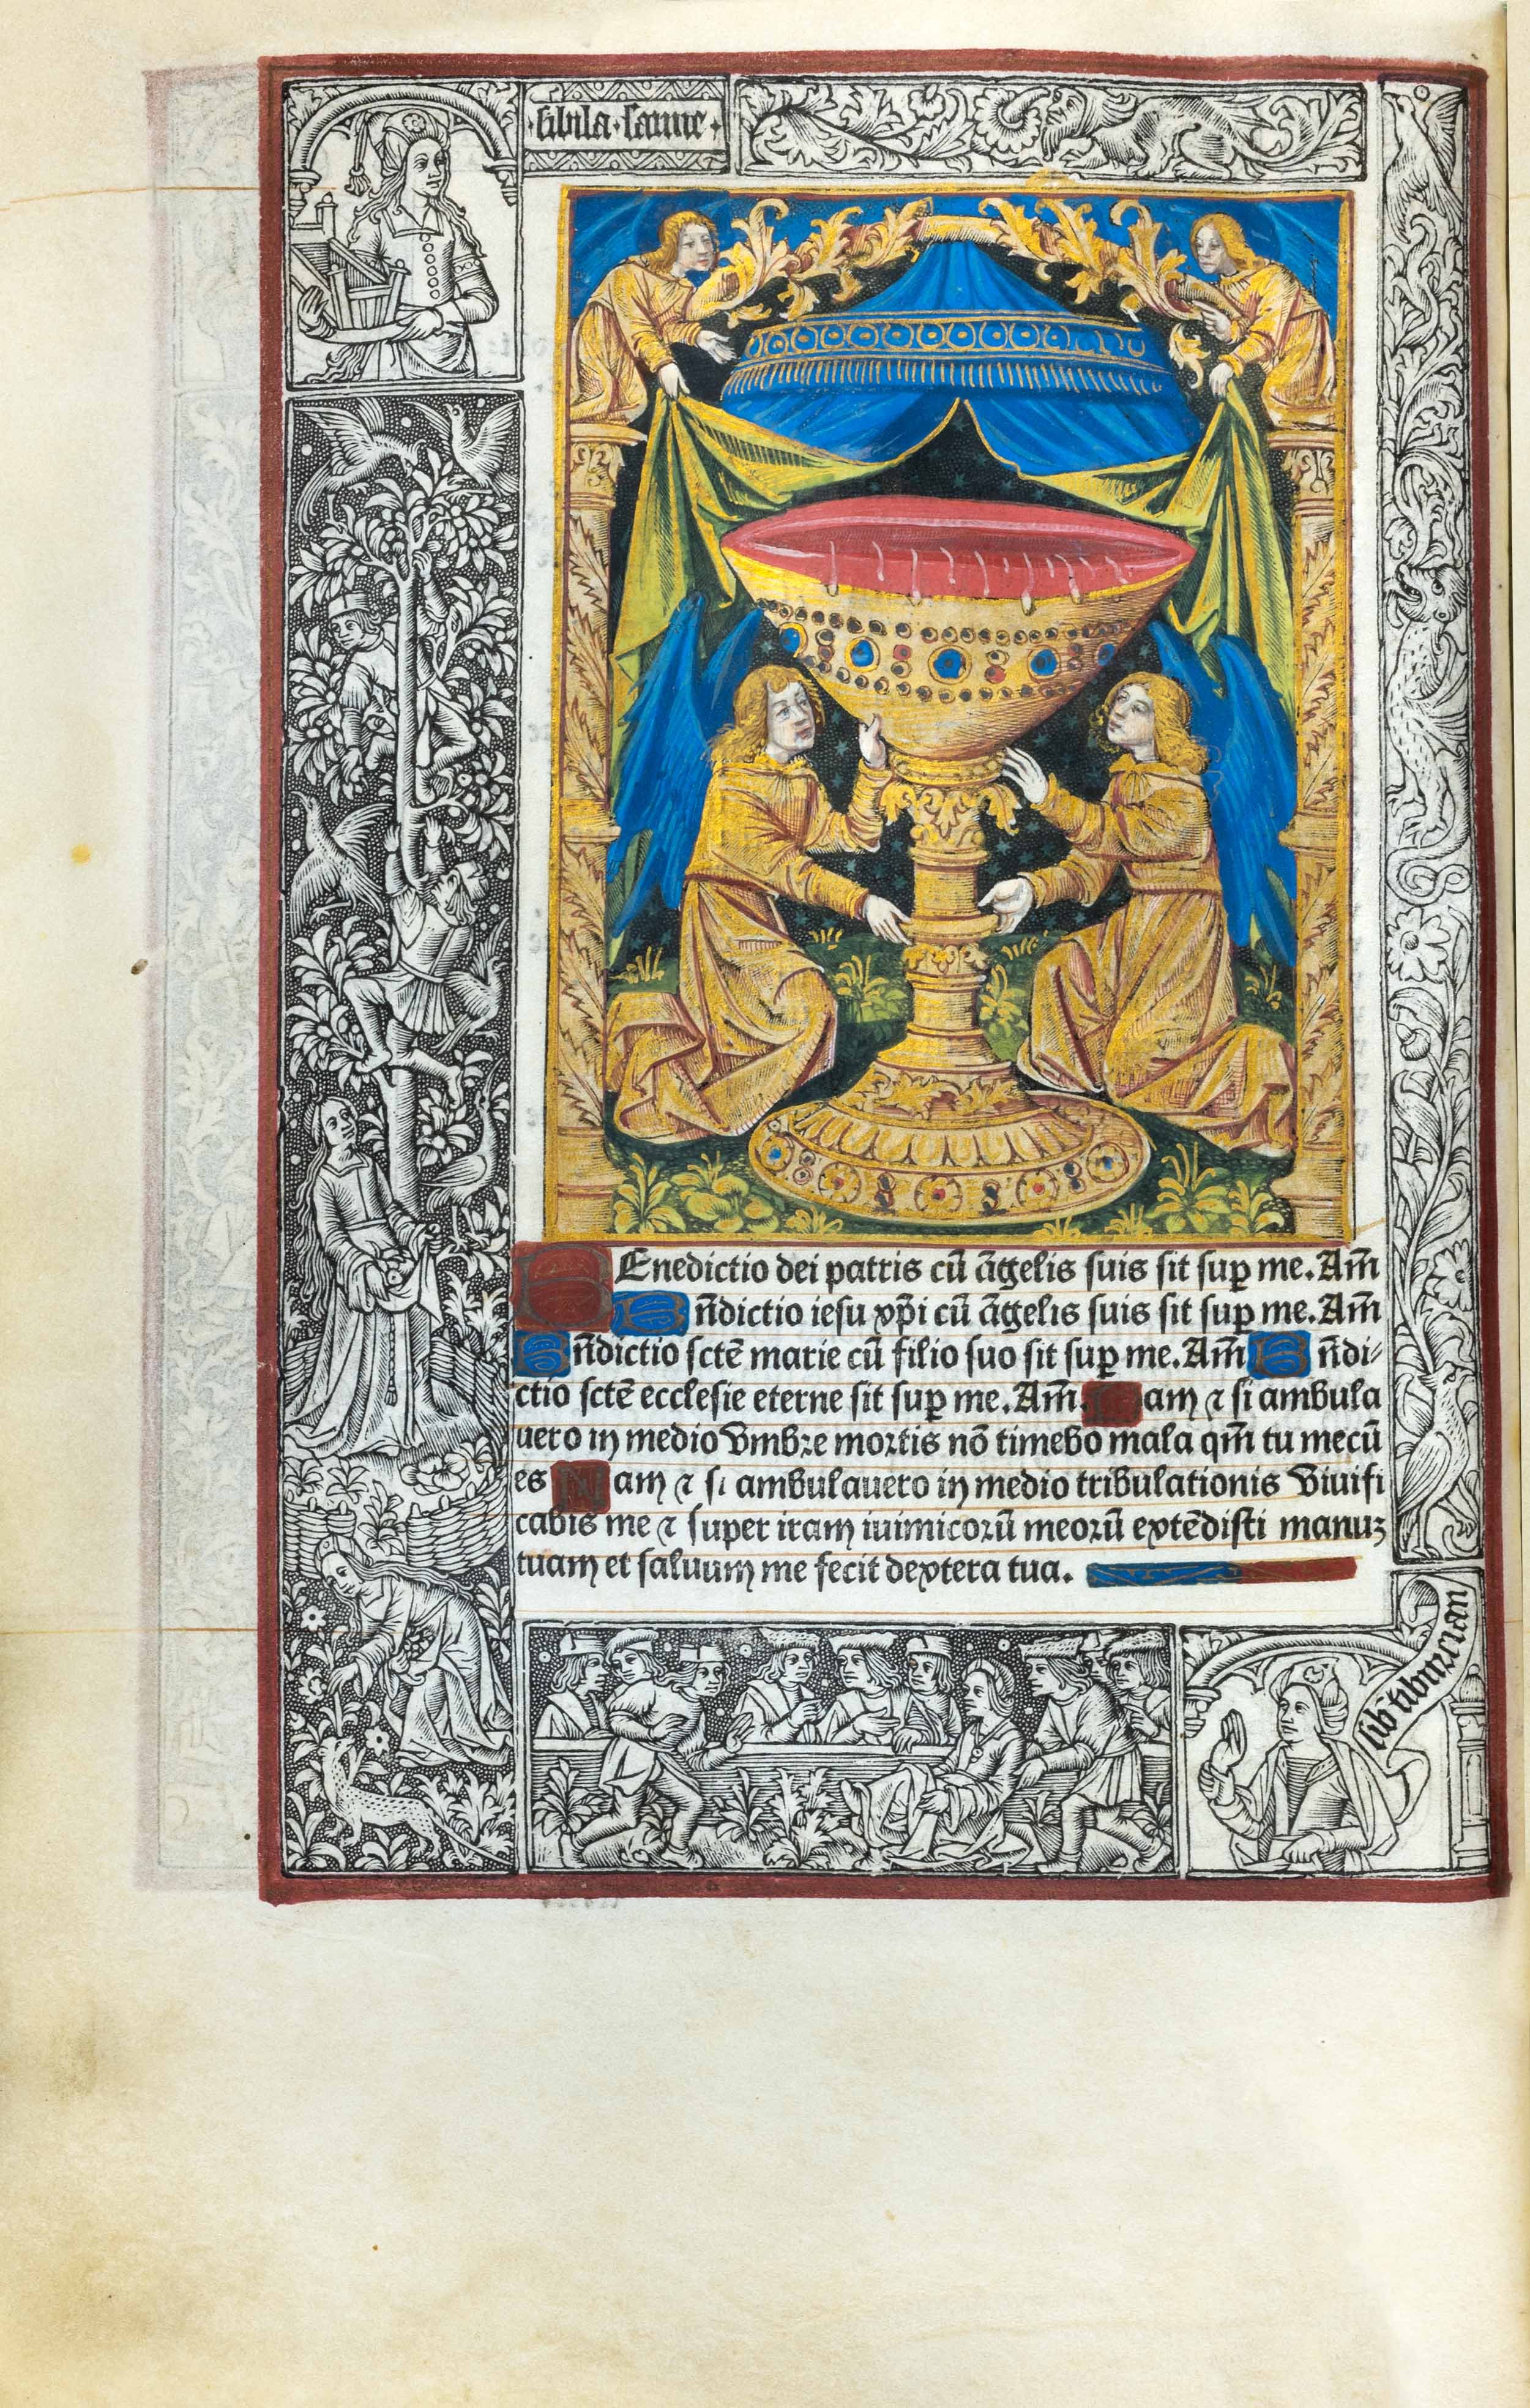 horae-bmv-16.9.1498-printed-book-of-hours-pigouchet-vostre-calixto crotus-illuminated-vellum-doheny-arcana-07.jpg